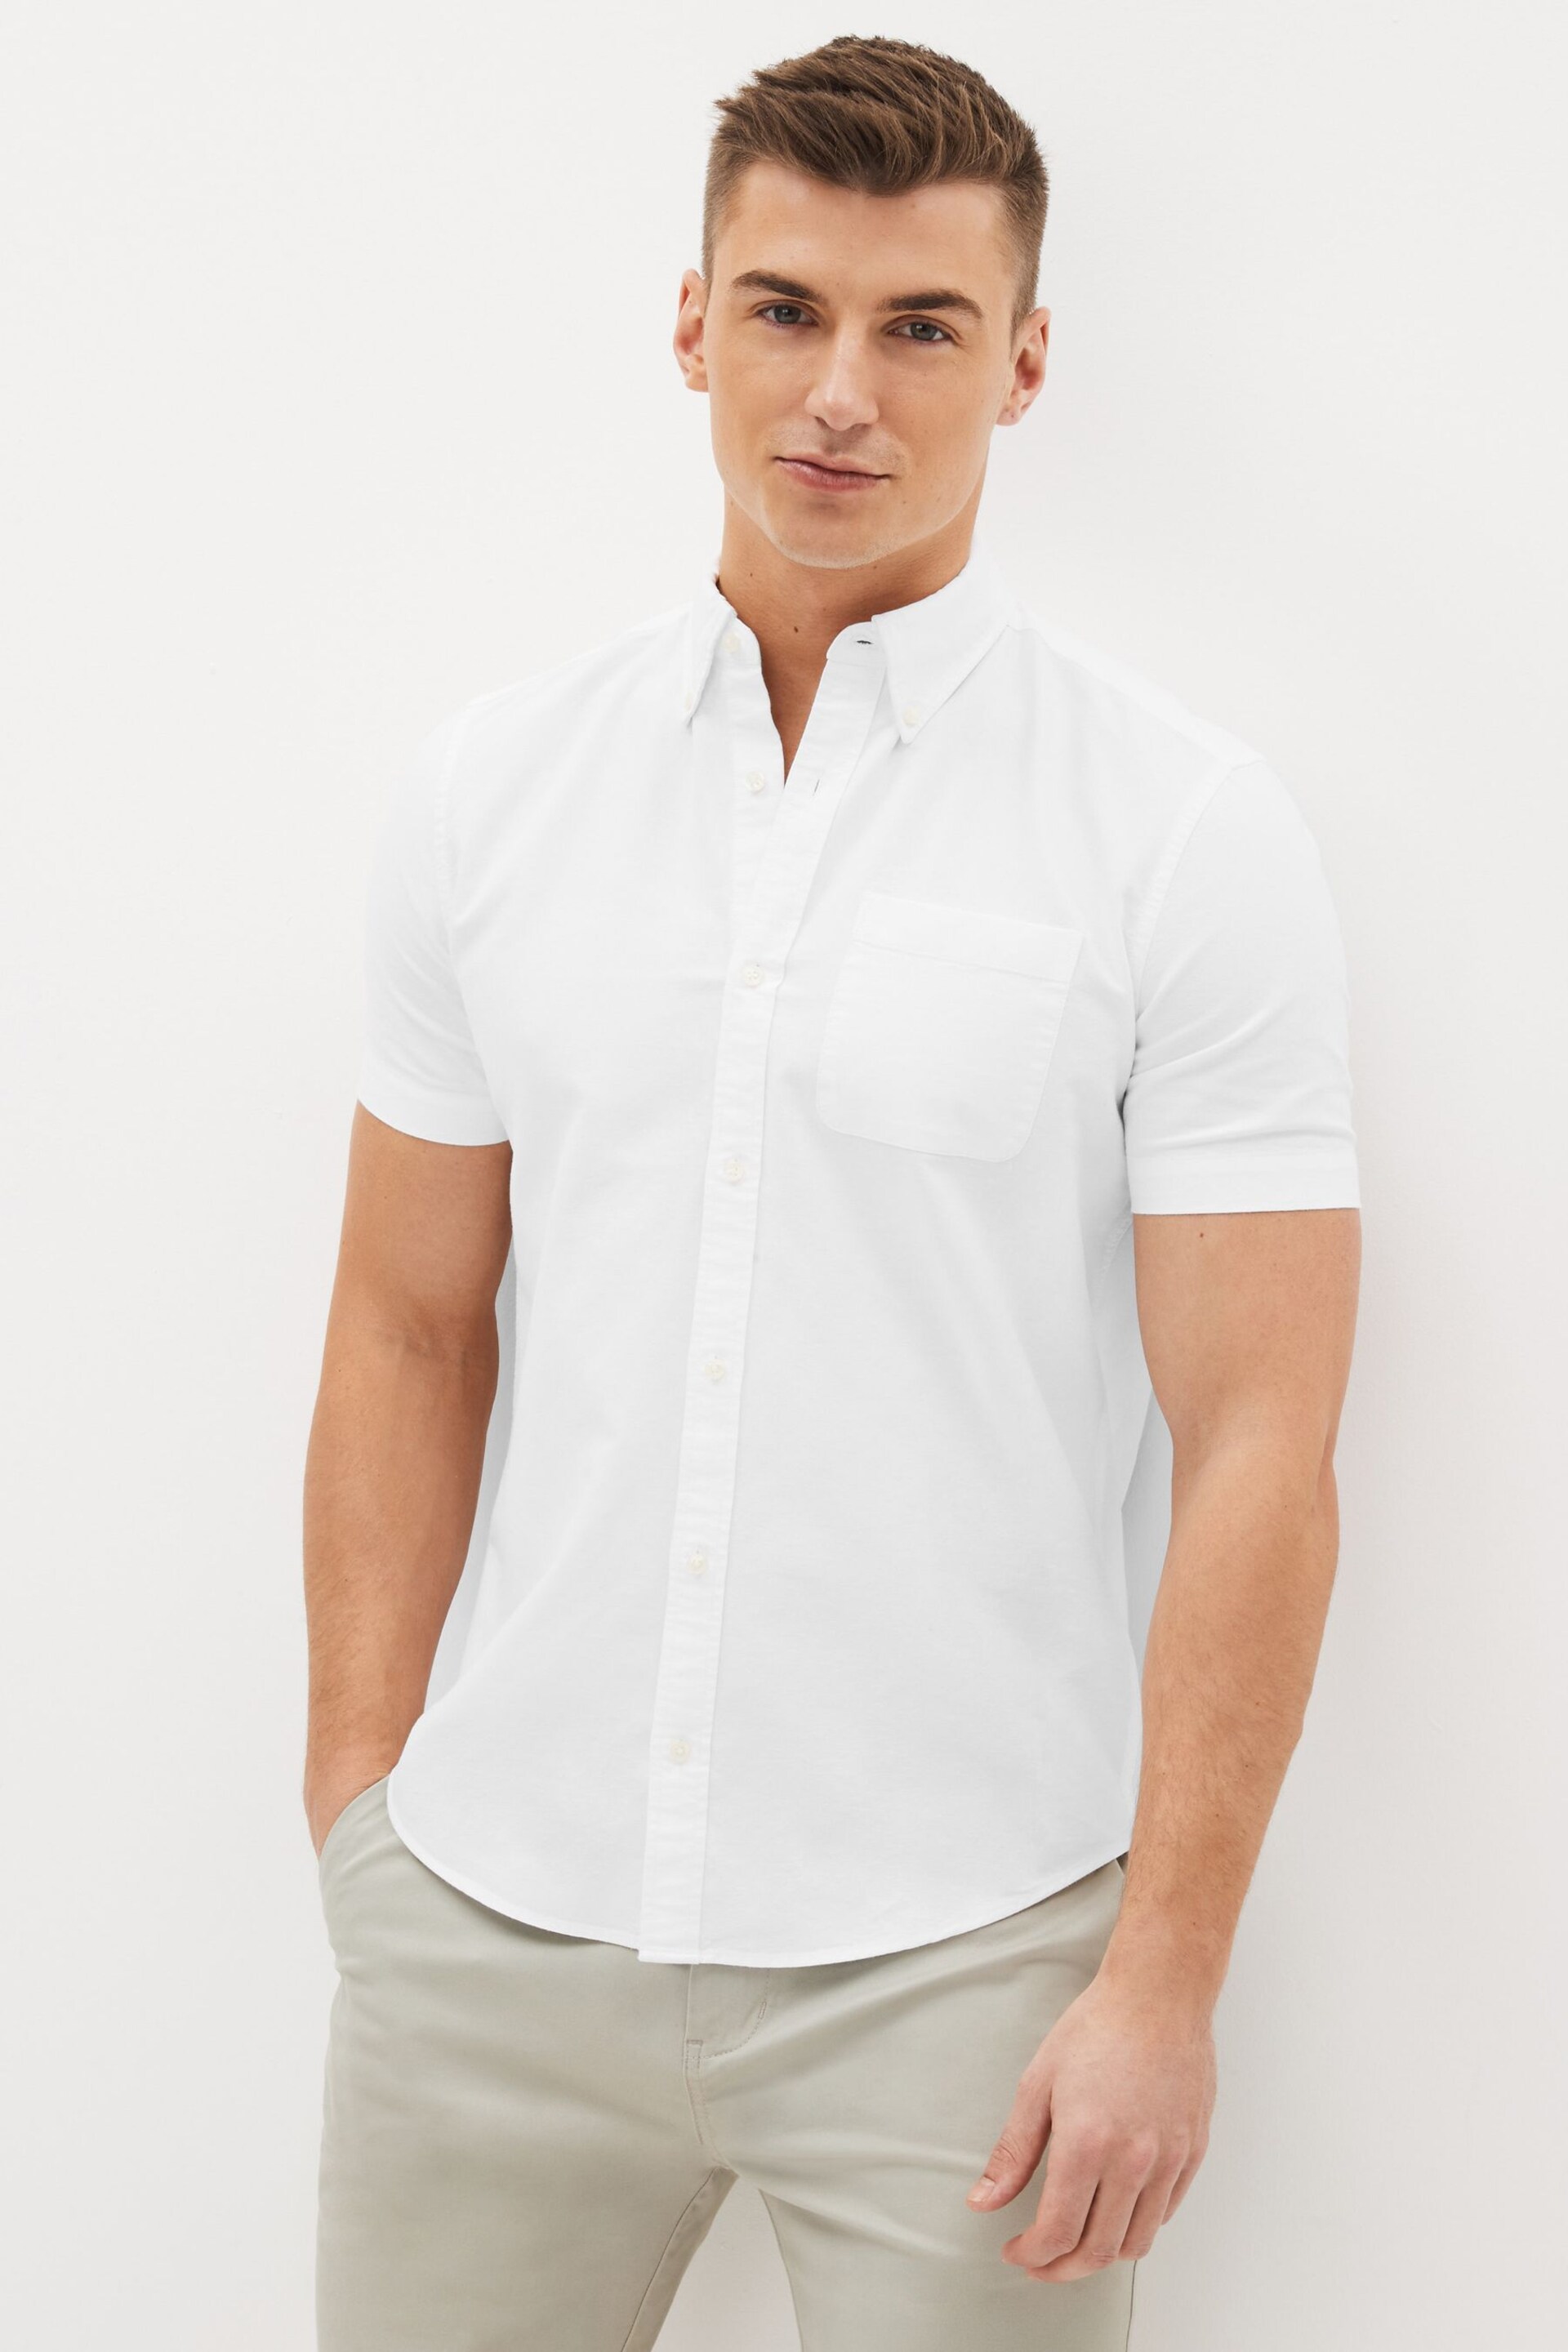 White/Navy/Gingham Short Sleeve Oxford Shirt 3 Pack - Image 5 of 9